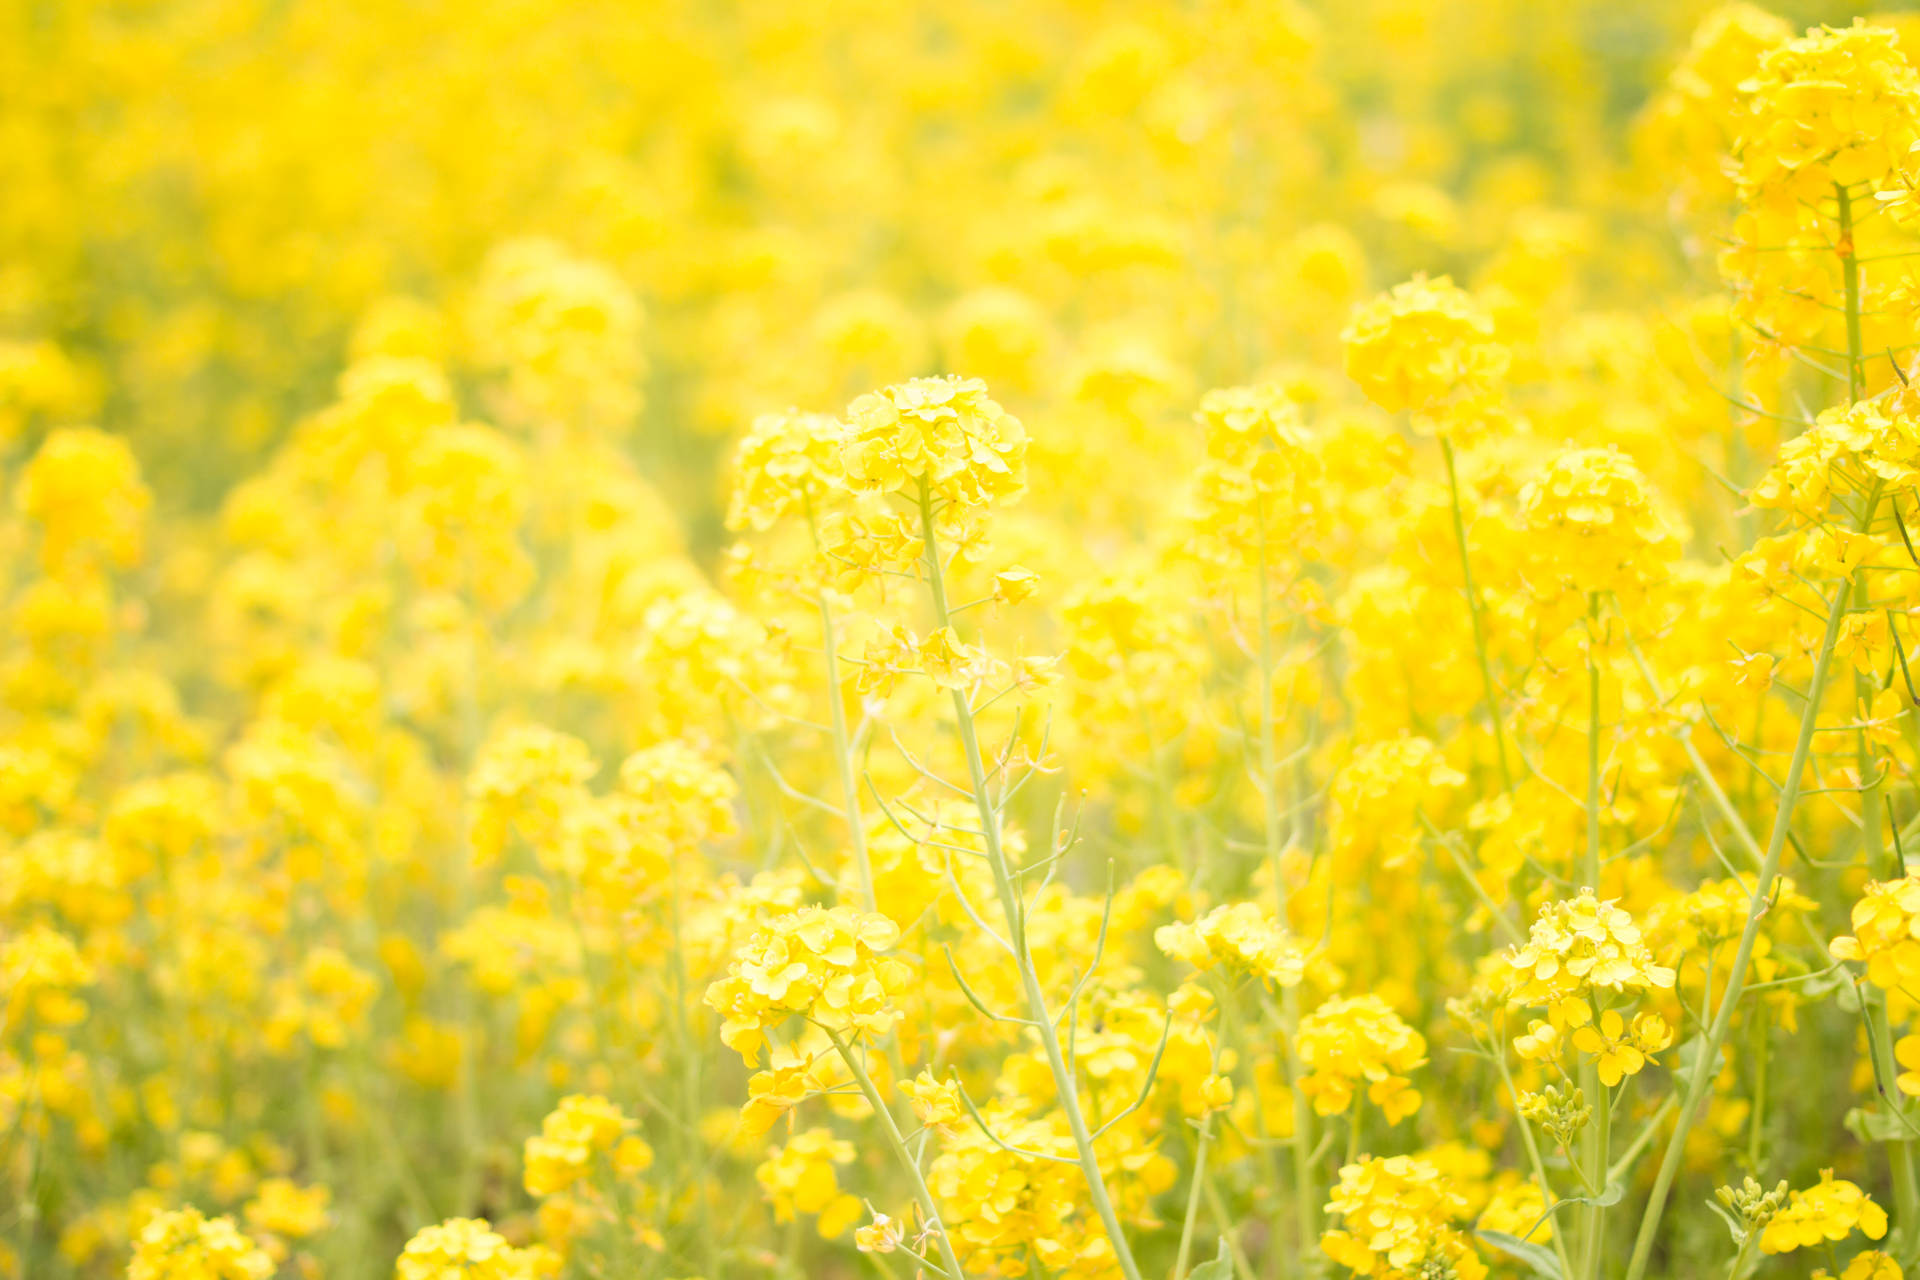 A Dreamy, Pastoral Scene of a Yellow Flower Field Wallpaper